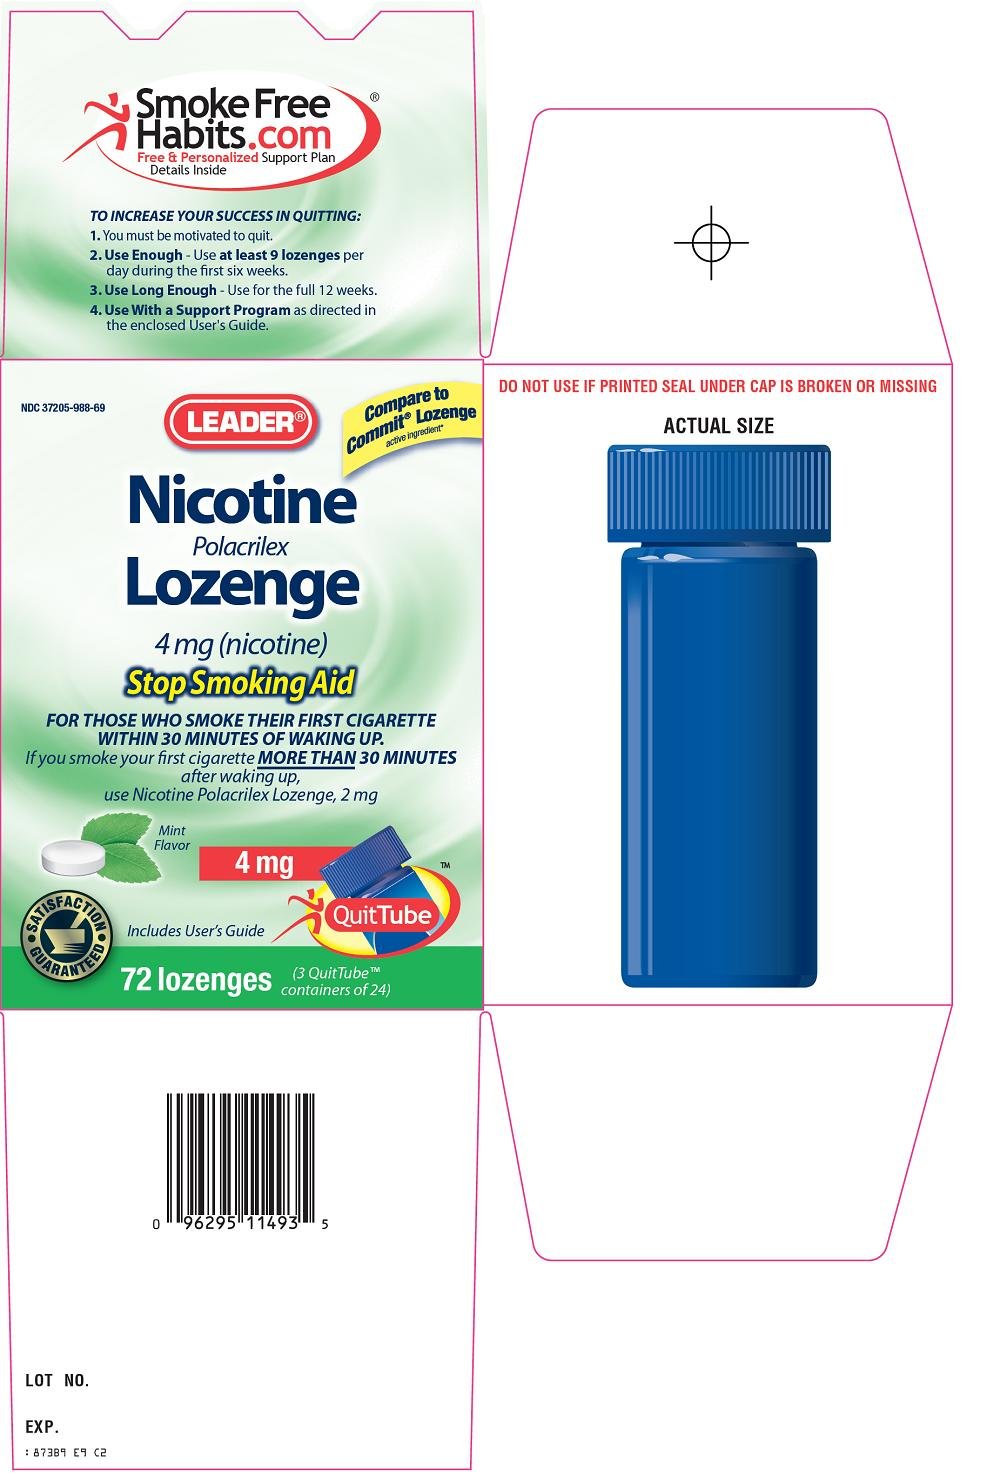 Nicotine Polacrilex Lozenge 4mg (nicotine) Carton Image 1